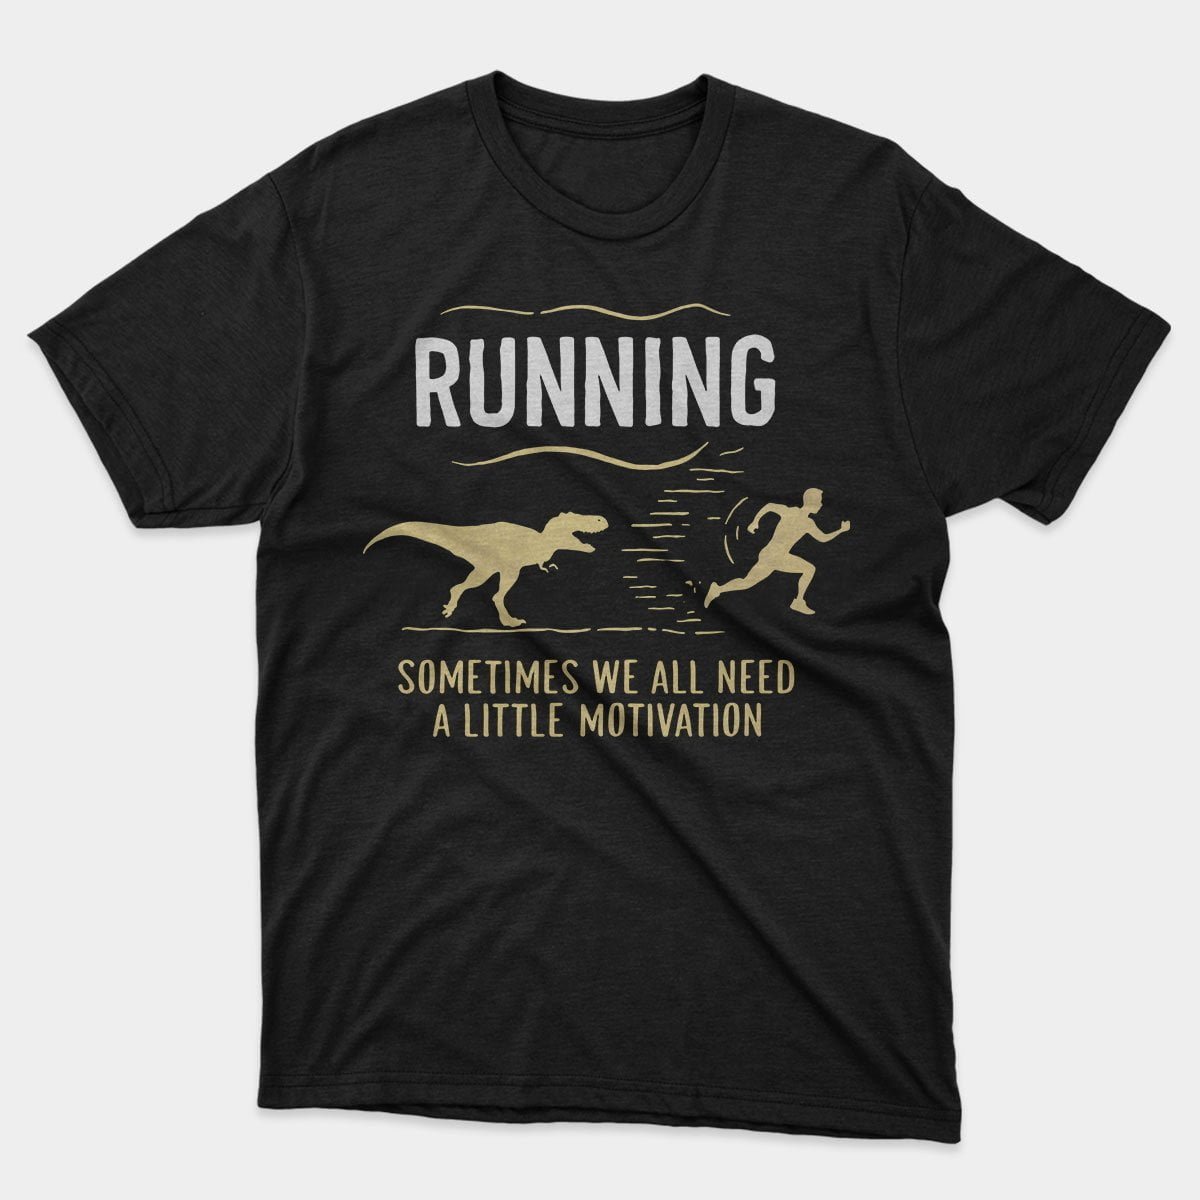 T-Rex-Motivation-T-shirt-black